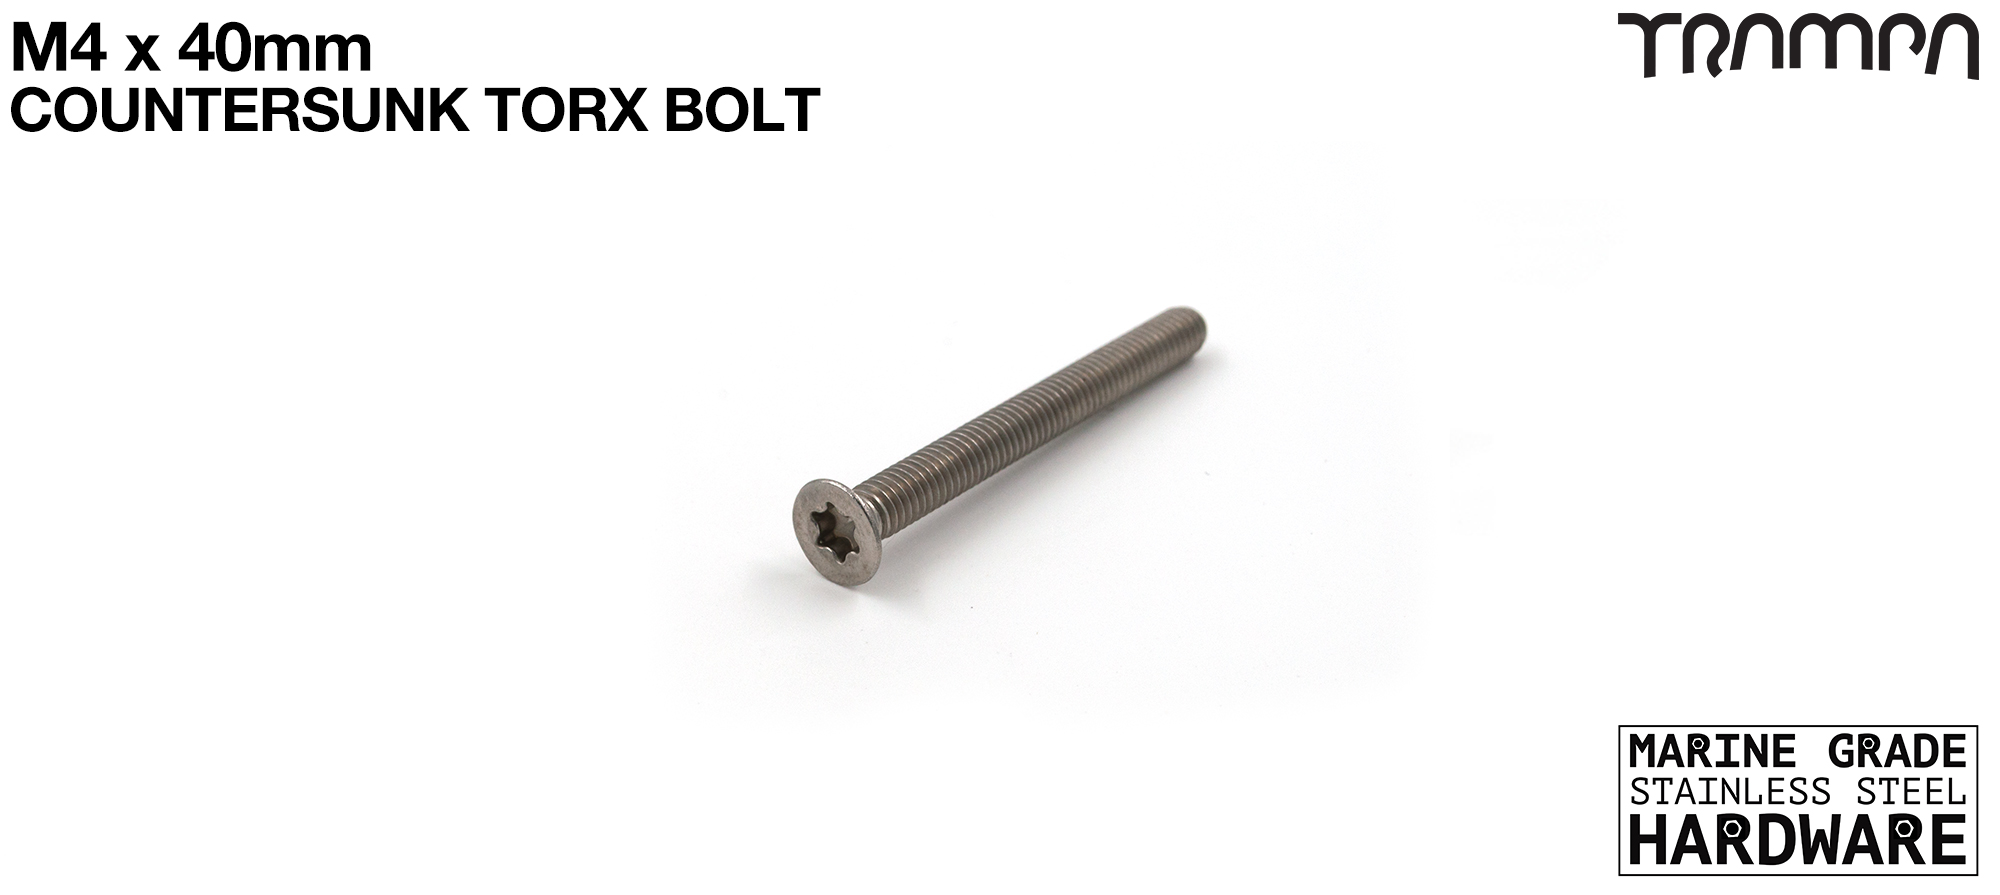 M4 x 40mm TORX Countersunk Bolt  Marine Grade Stainless Steel